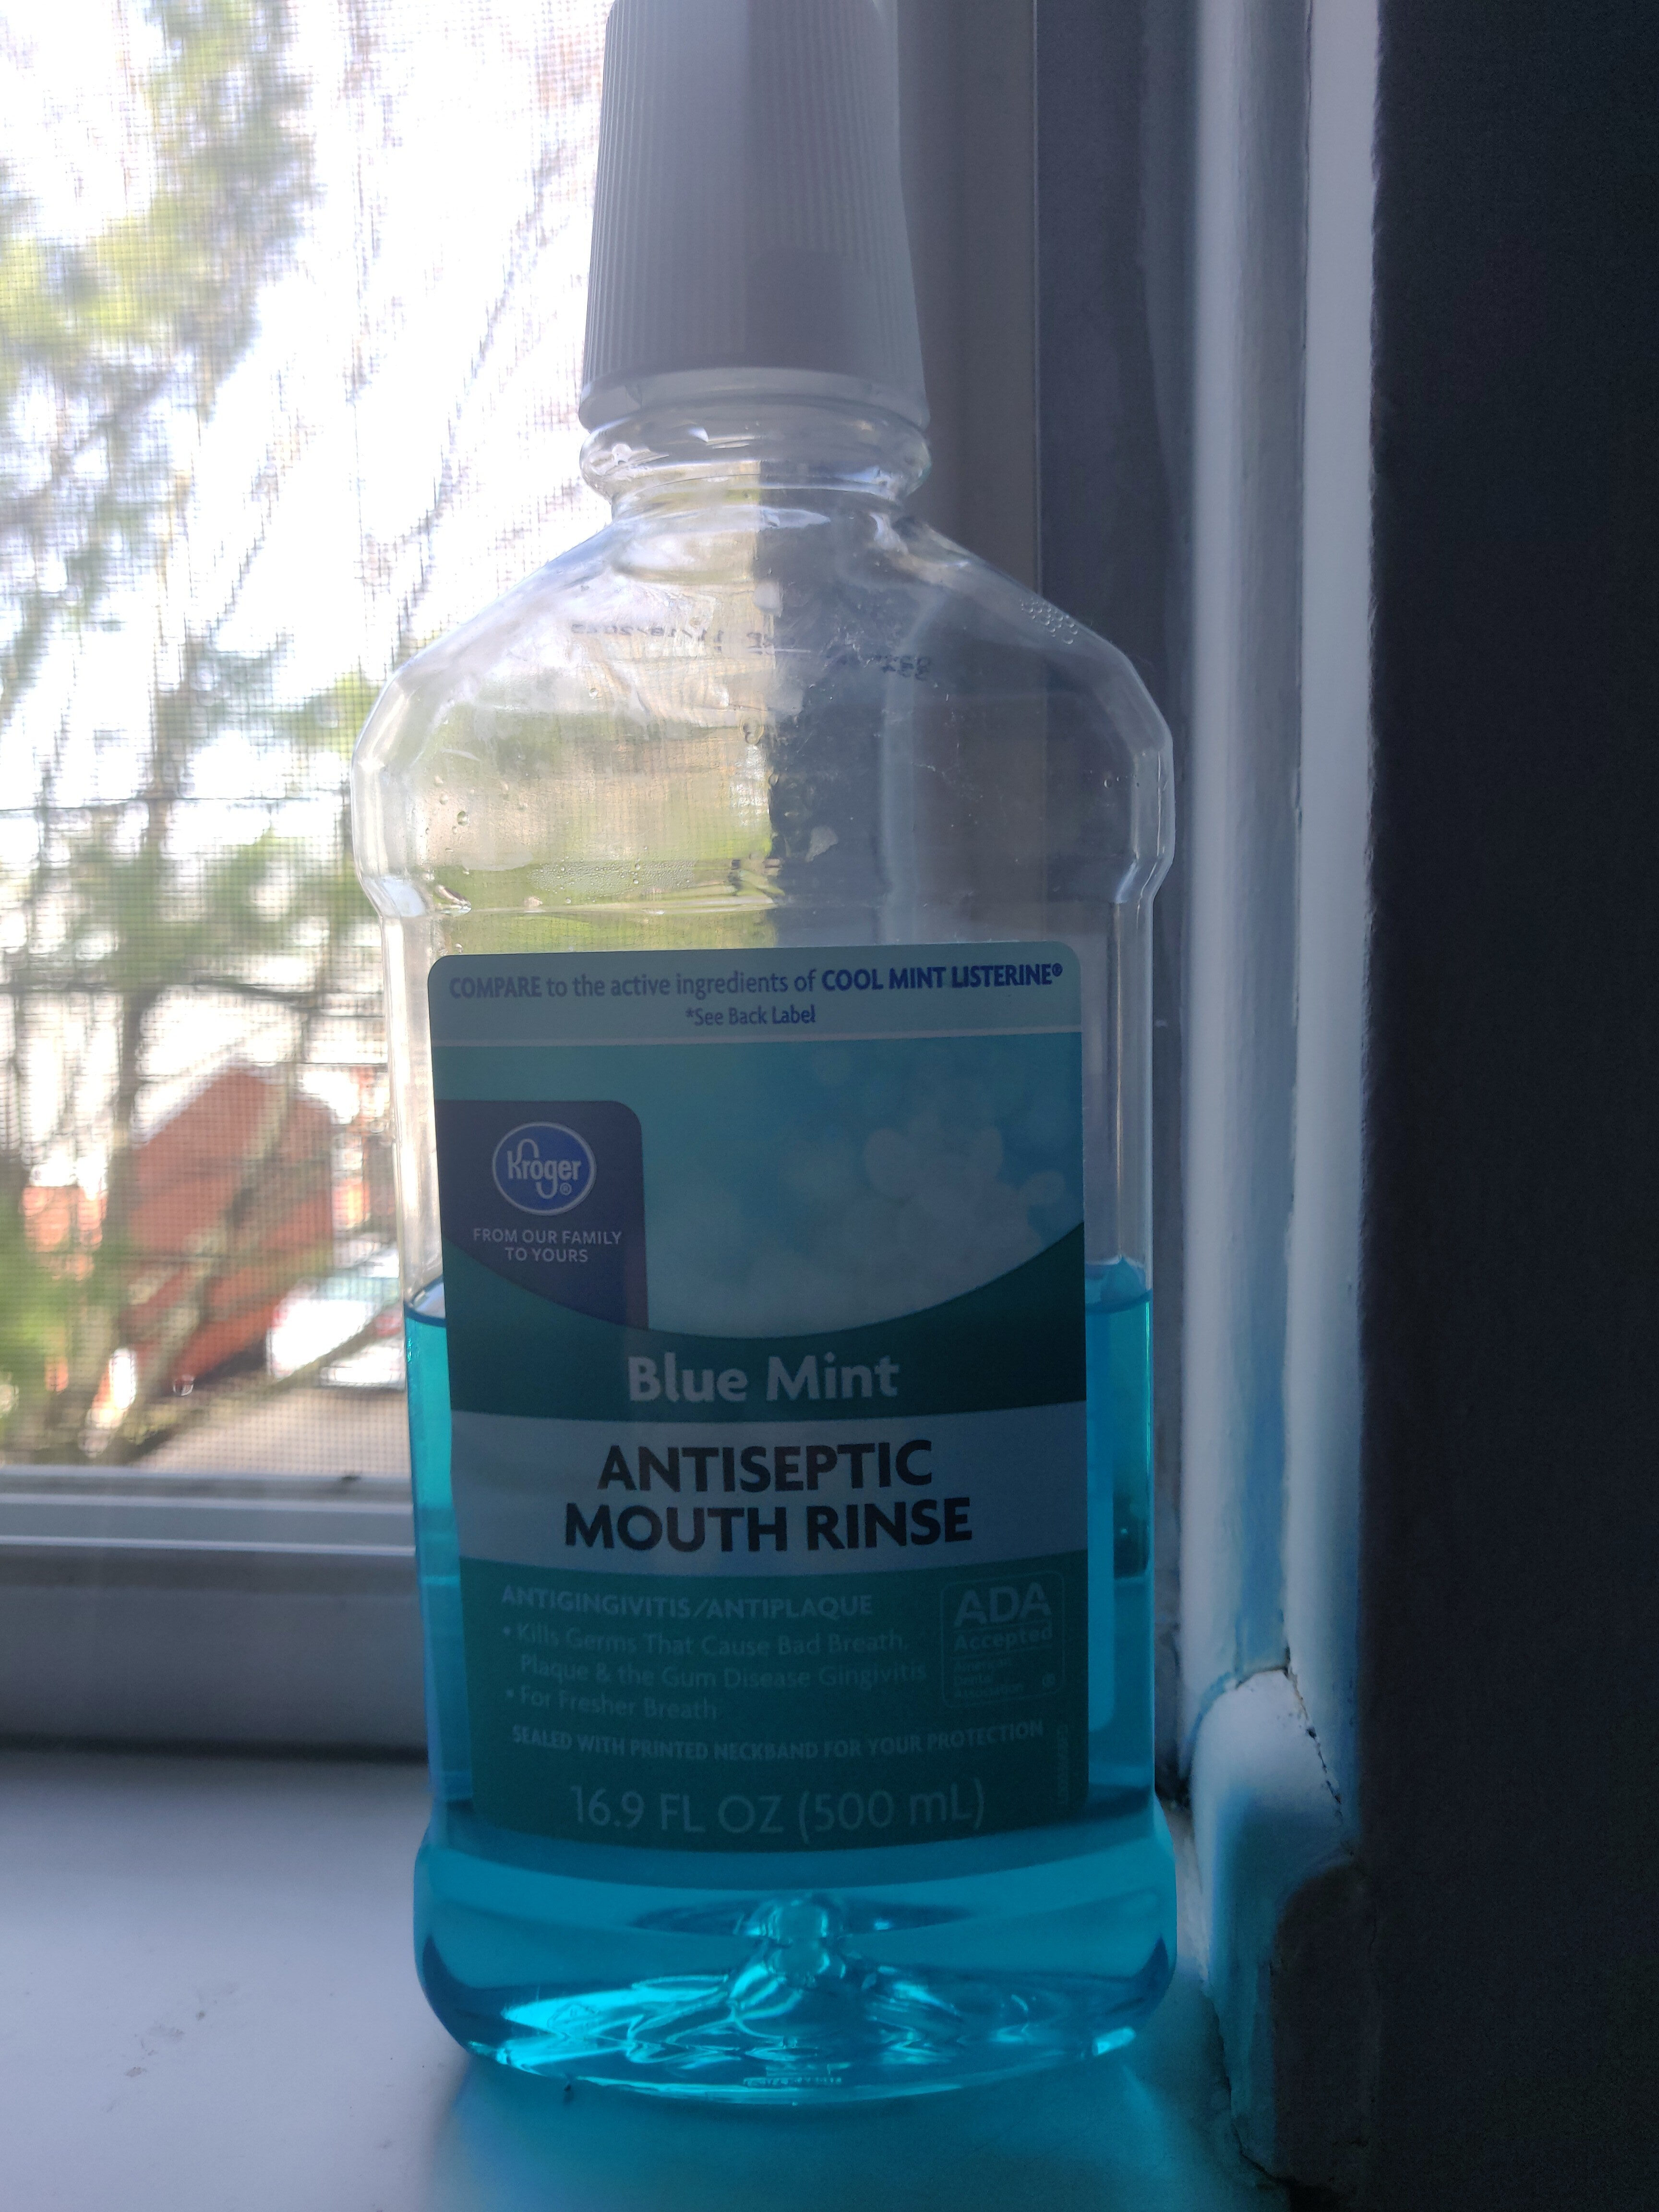 Antiseptic Mouth Rinse - Produkto - en